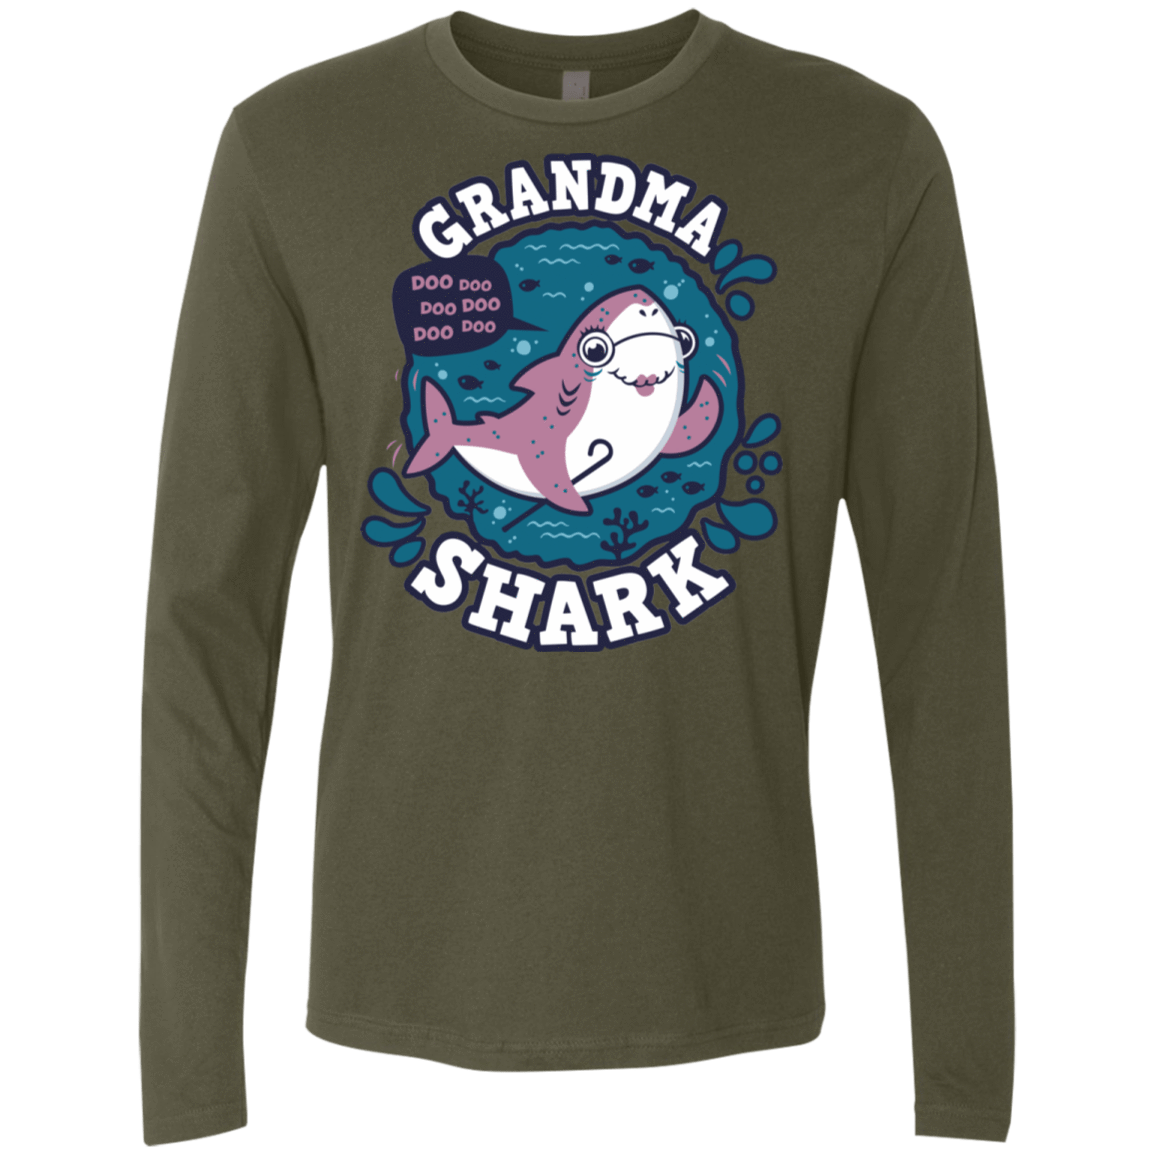 T-Shirts Military Green / S Shark Family trazo - Grandma Men's Premium Long Sleeve